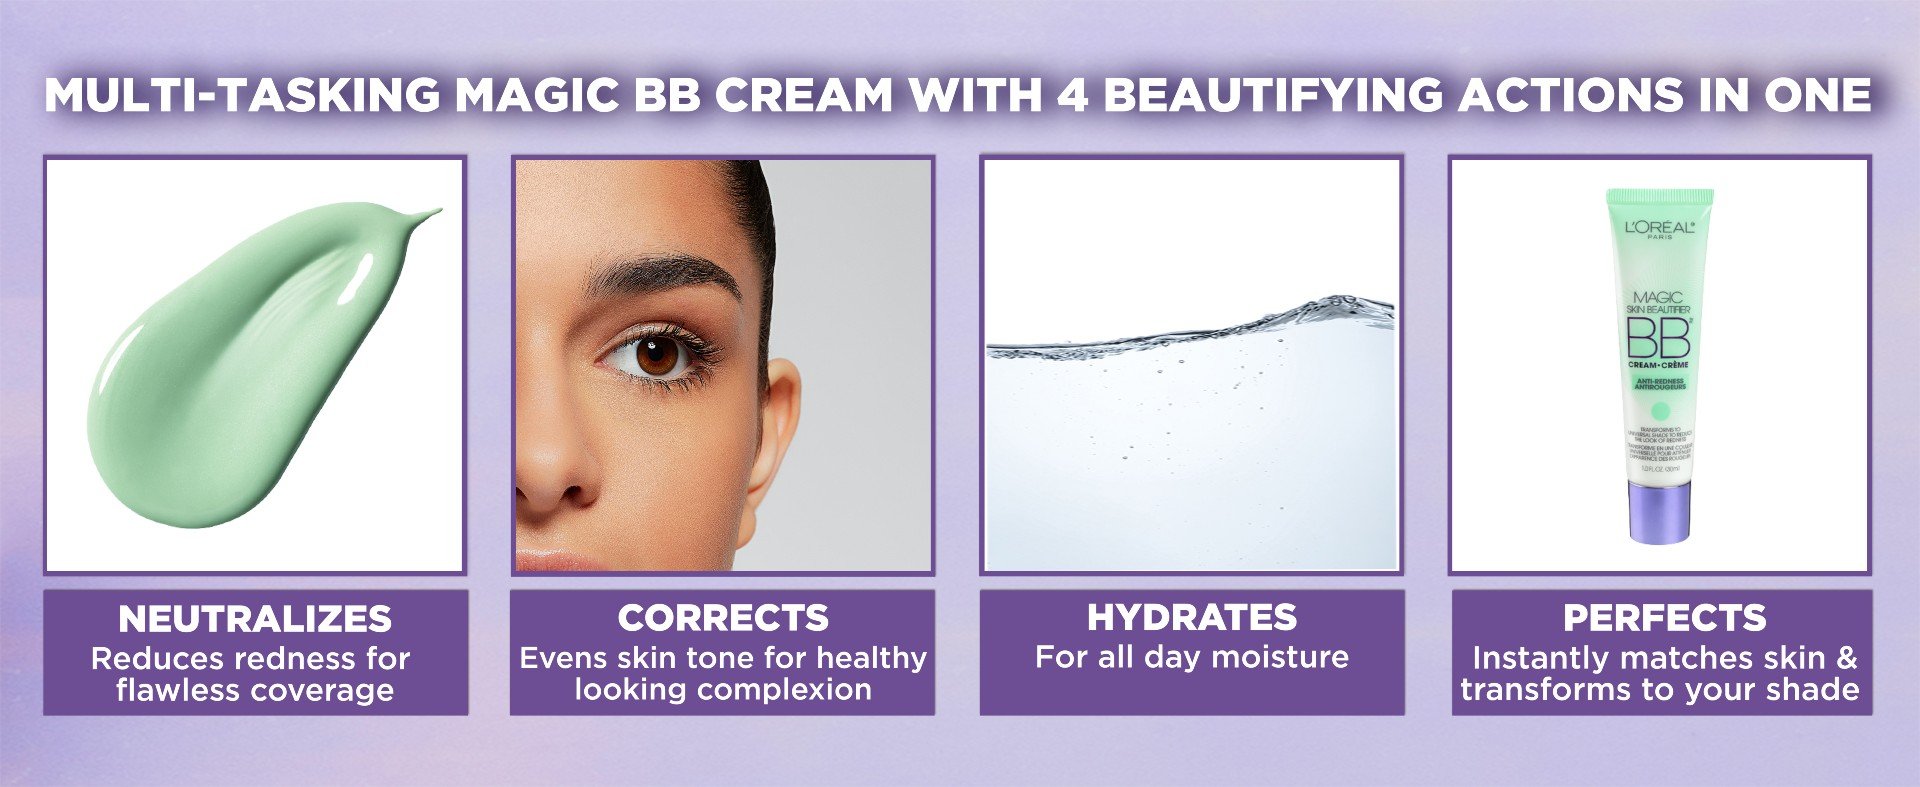 Magic BB For All Skin Types - L'Oréal Paris